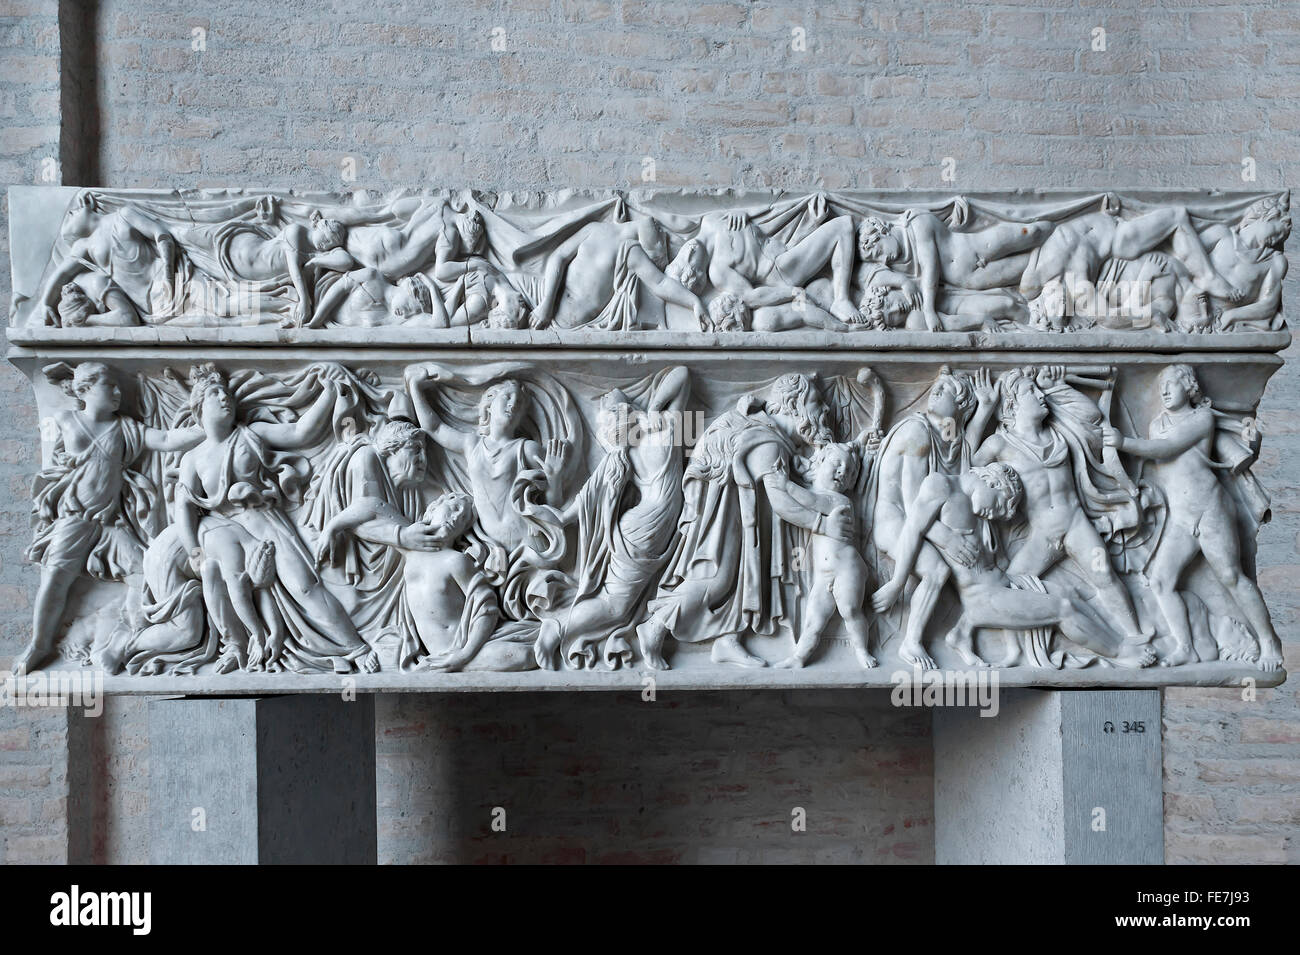 Sarkophark romano, Apolo y Artemis matar niños de Niobeniobe, Glyptothek, Königsplatz, Munich, la Alta Baviera, Alemania Foto de stock